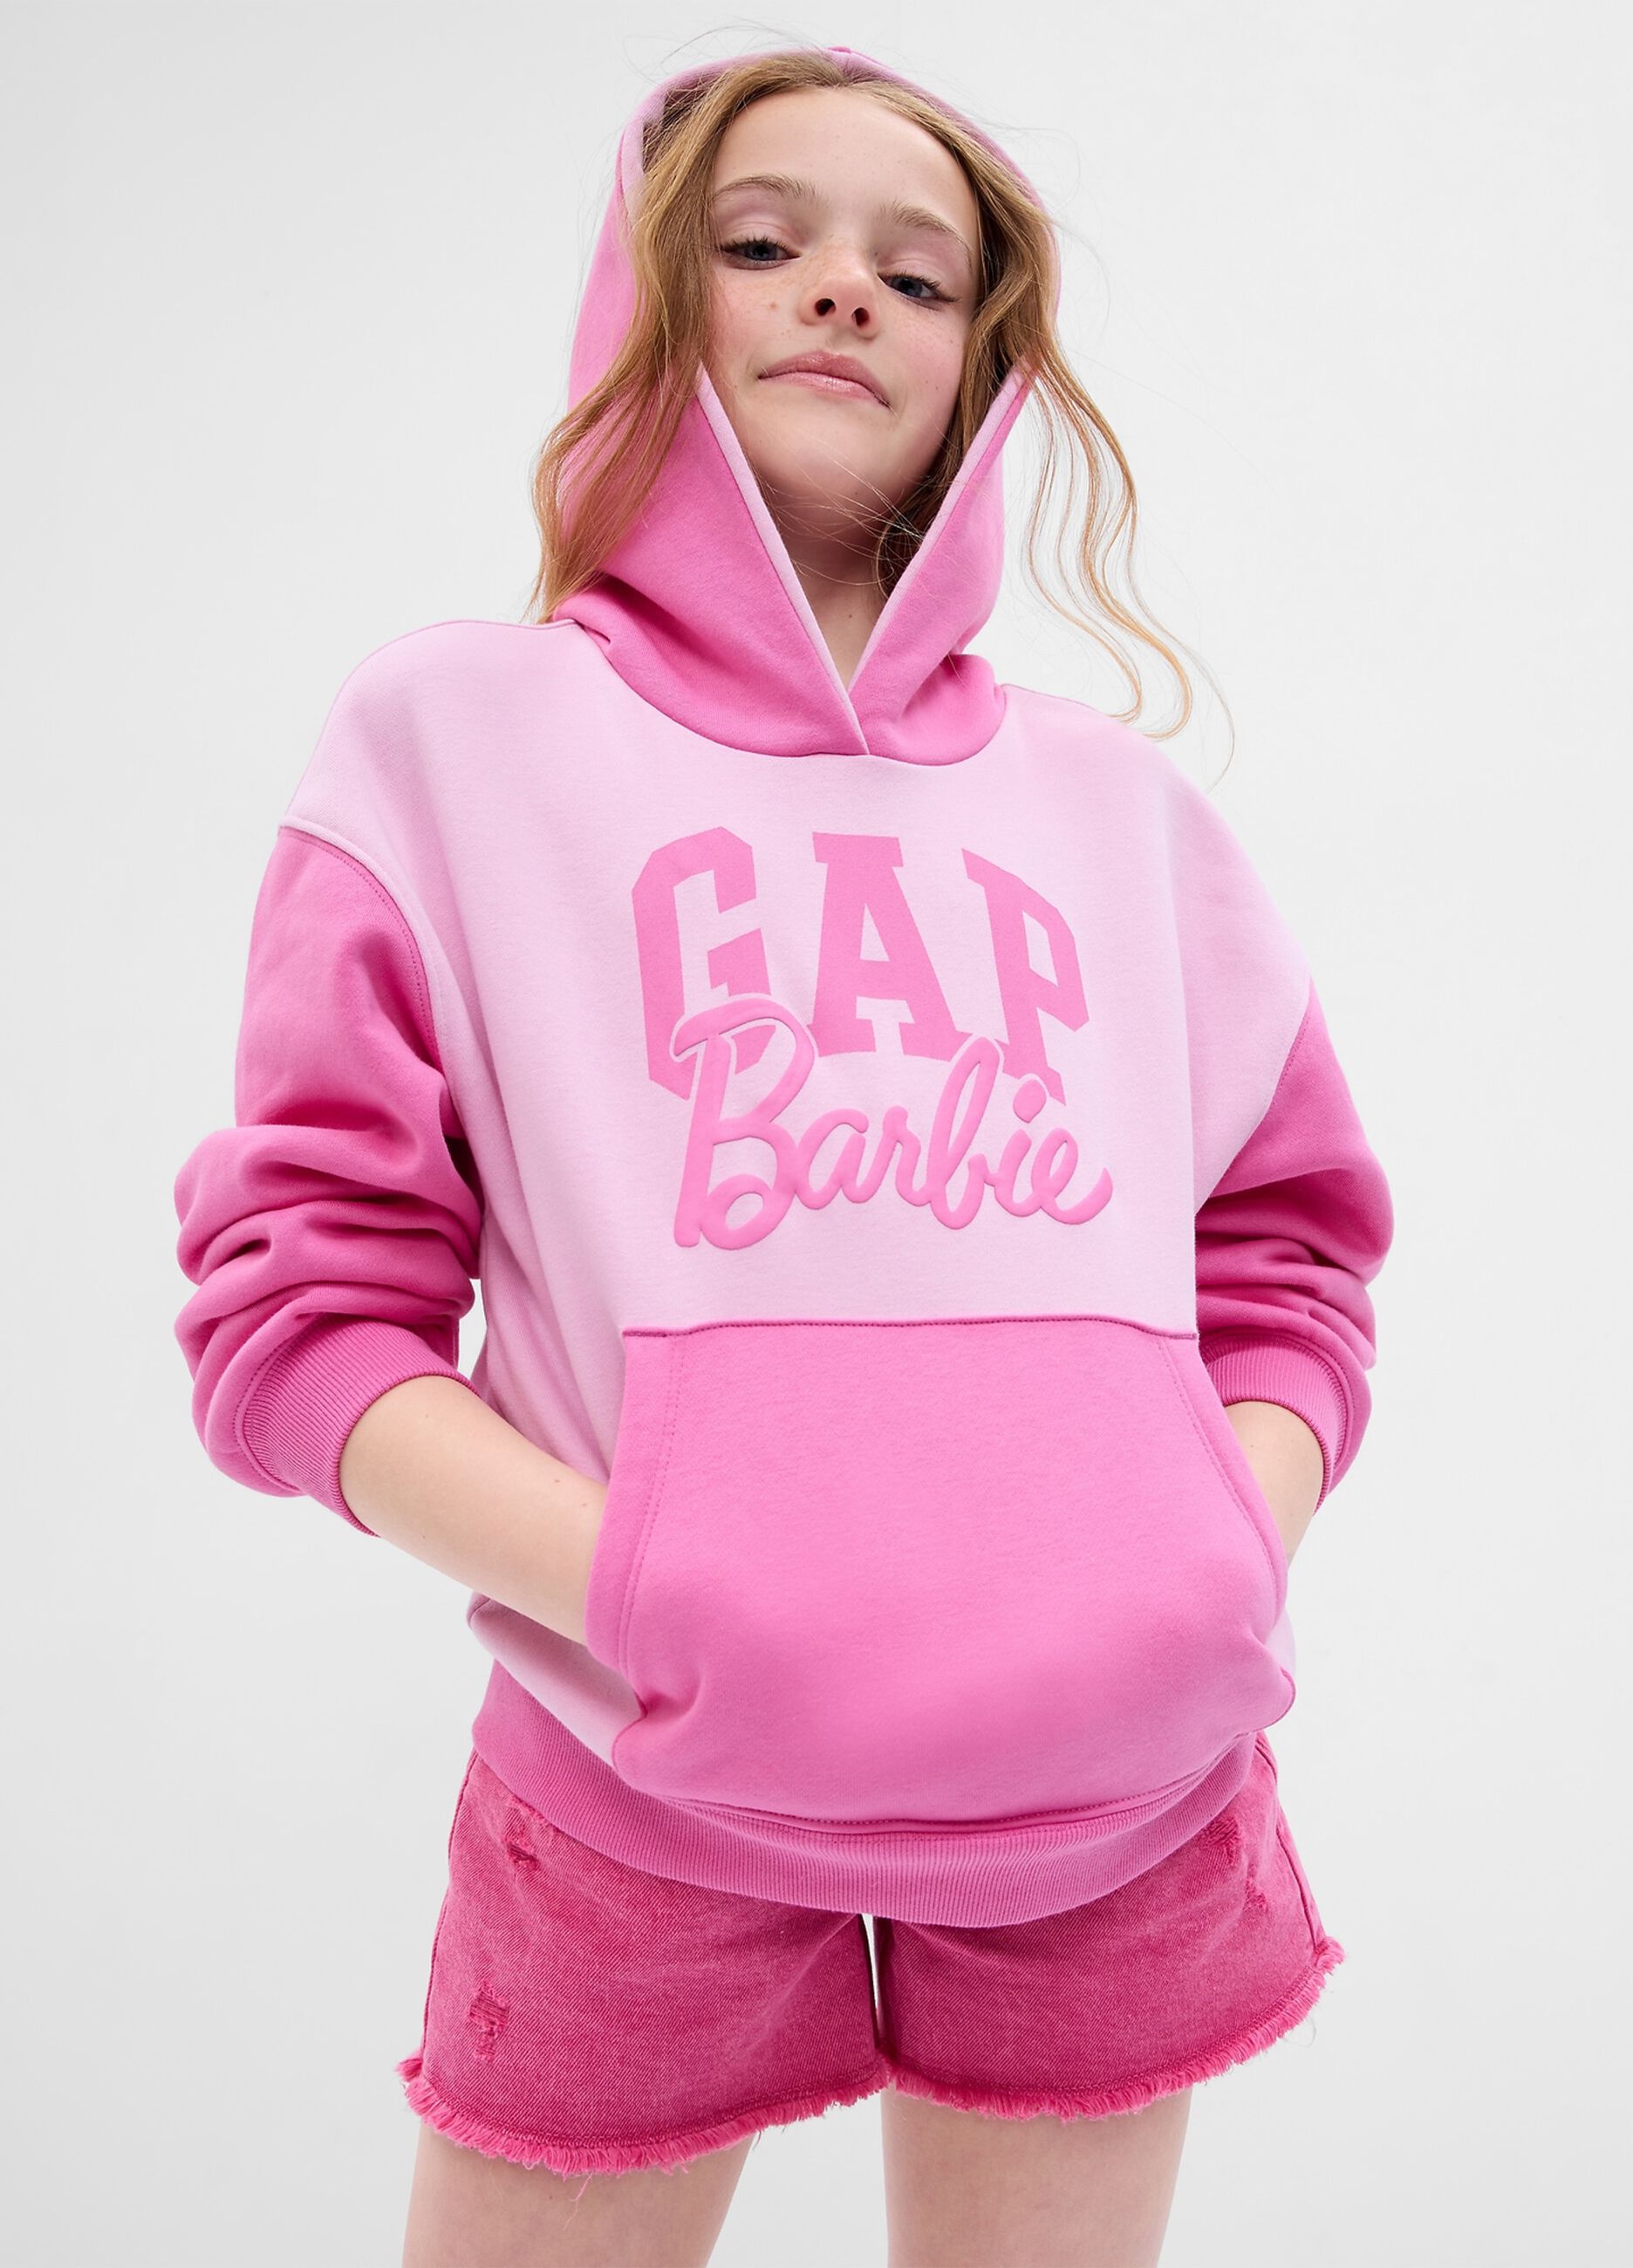 GAP x Barbie™ Collection - GAP Italia